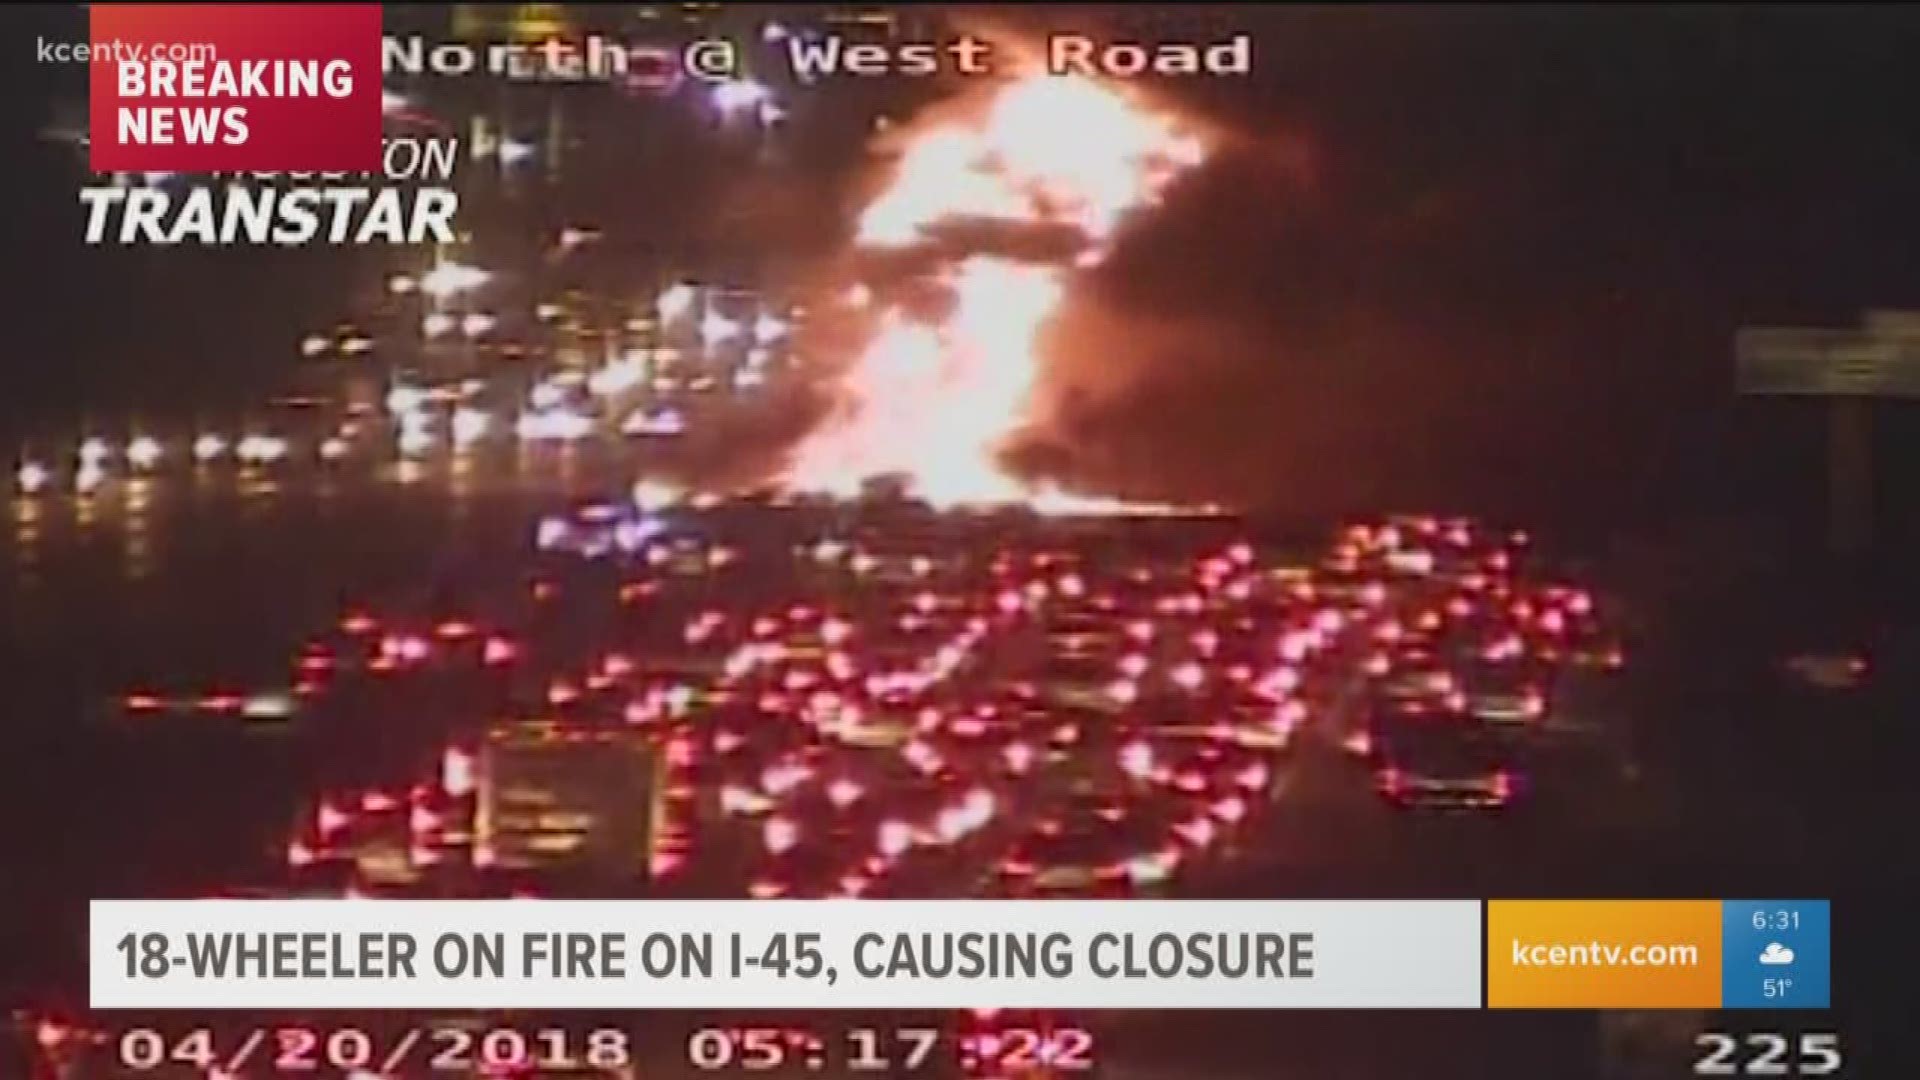 18-wheeler on fire on I-45 causing closure. 